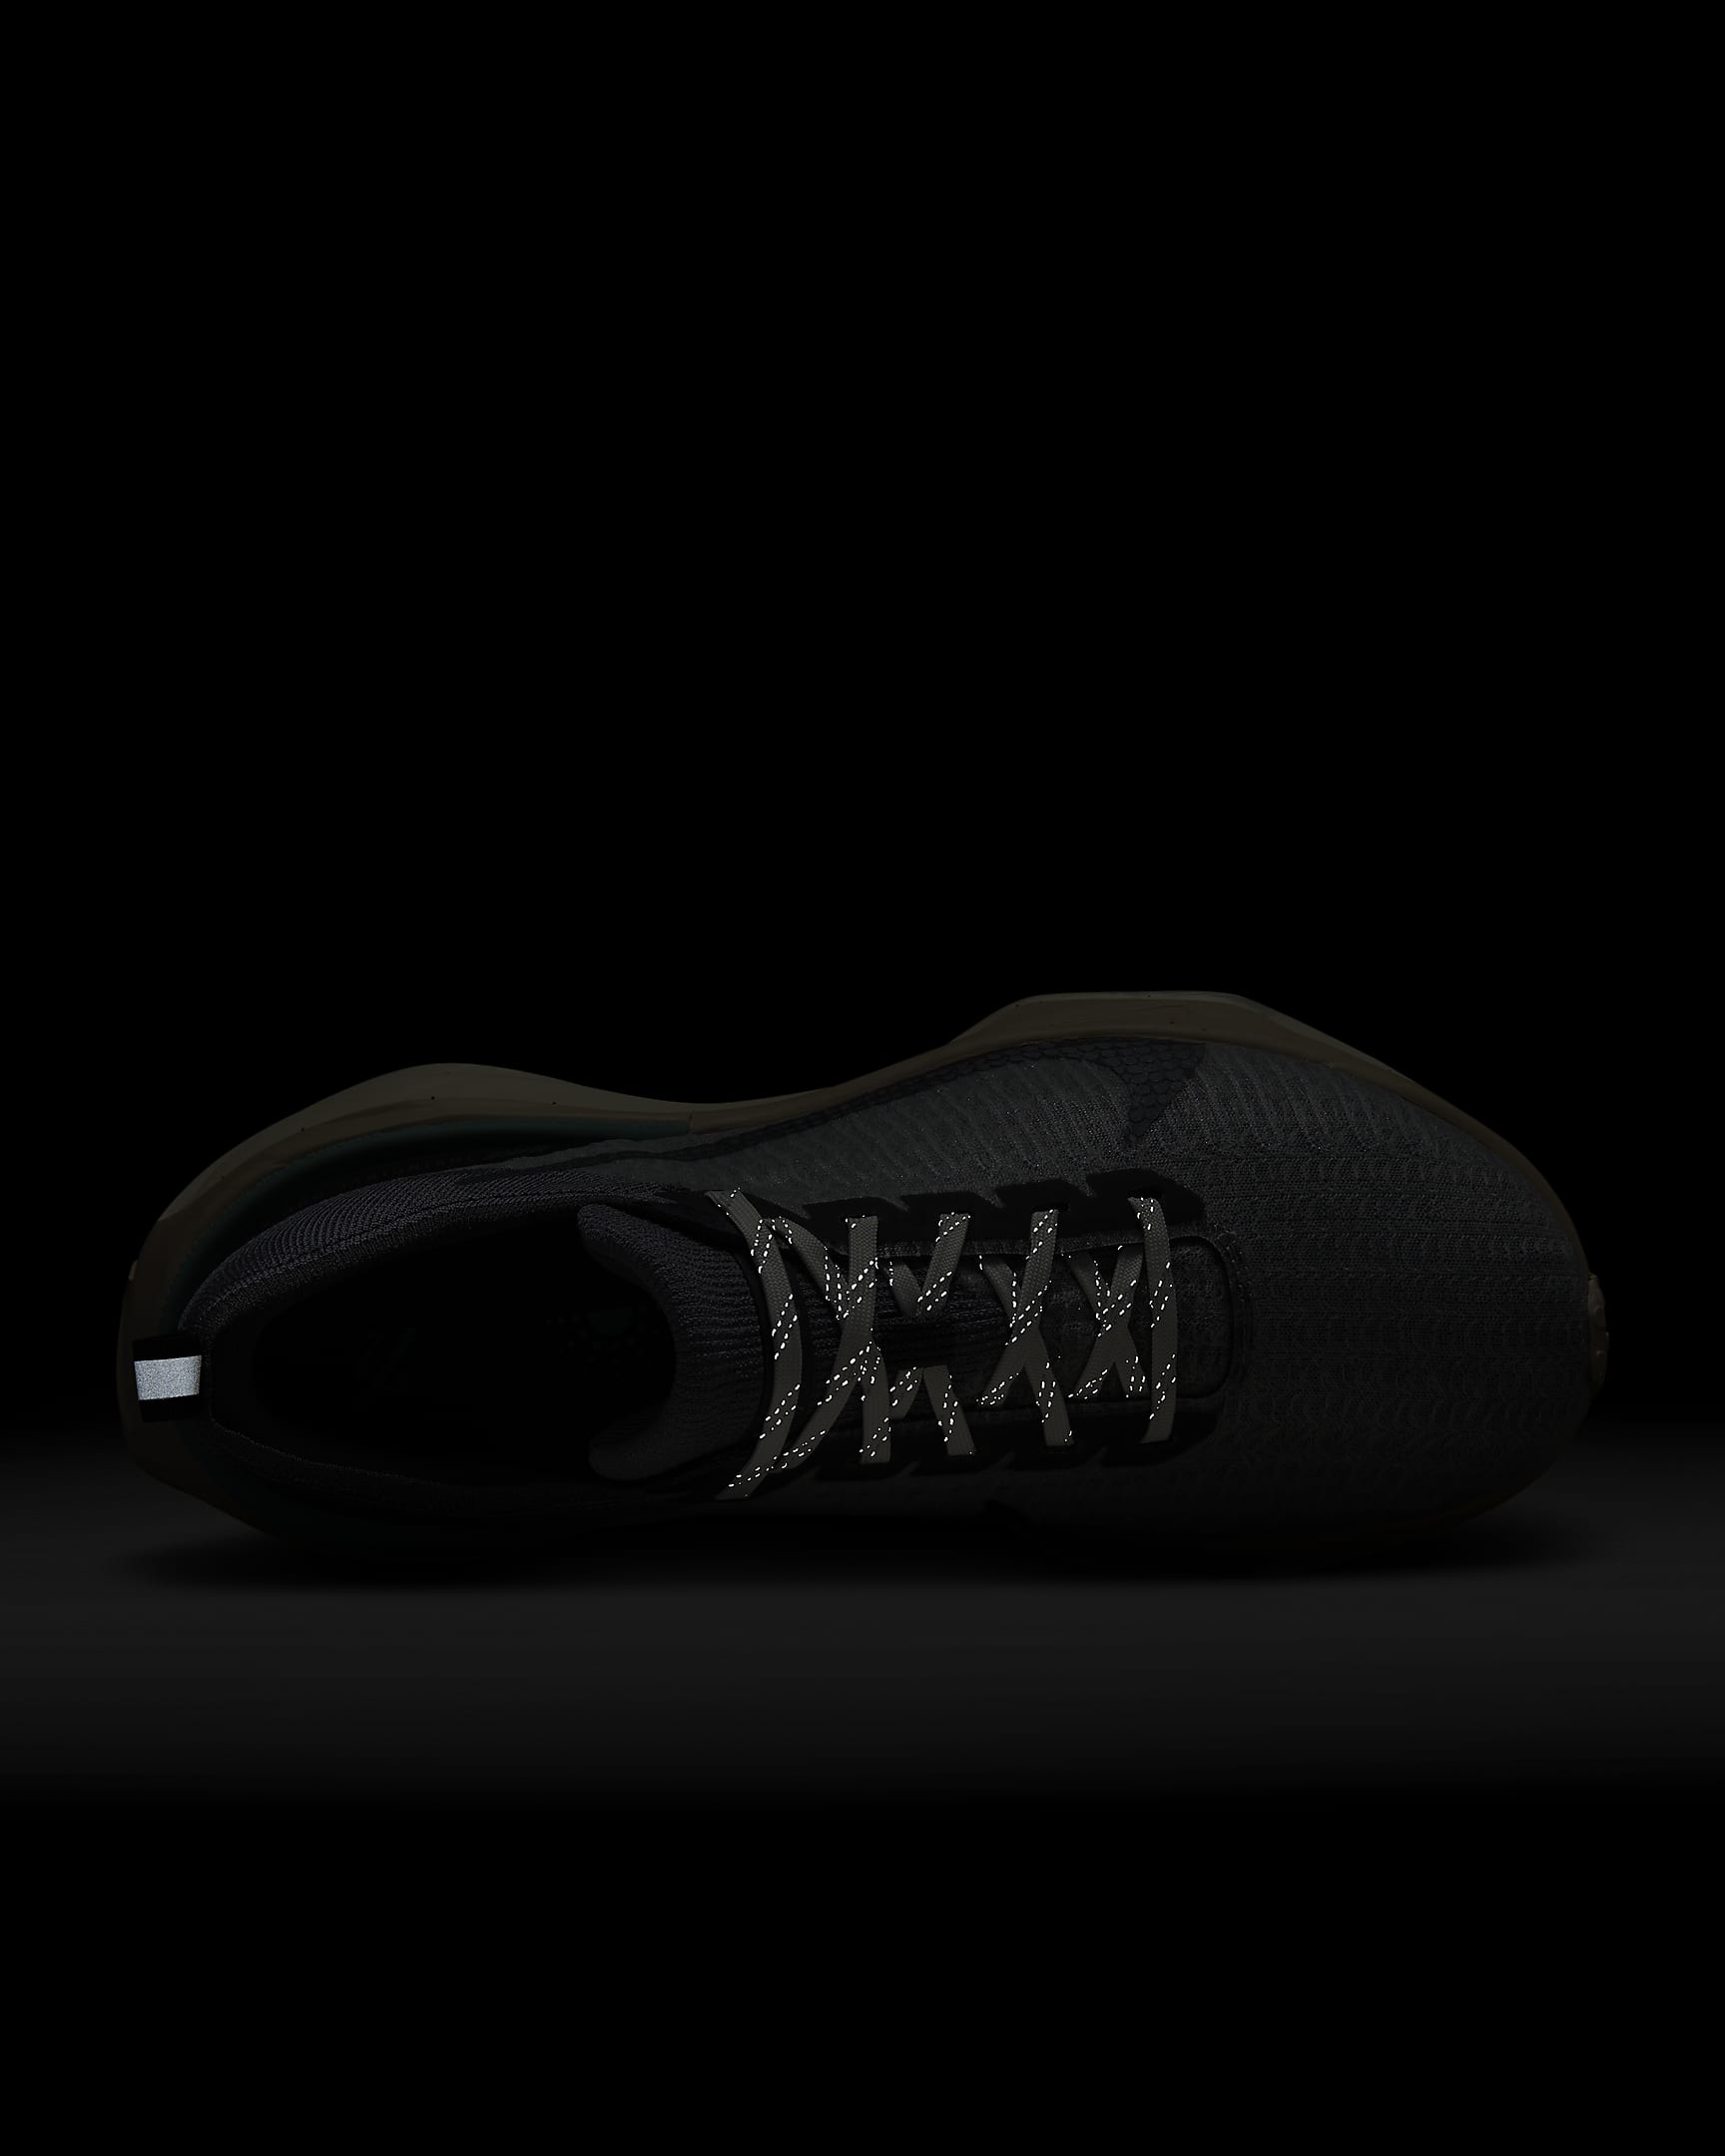 Calzado de running en carretera para hombre Nike Invincible 3. Nike.com